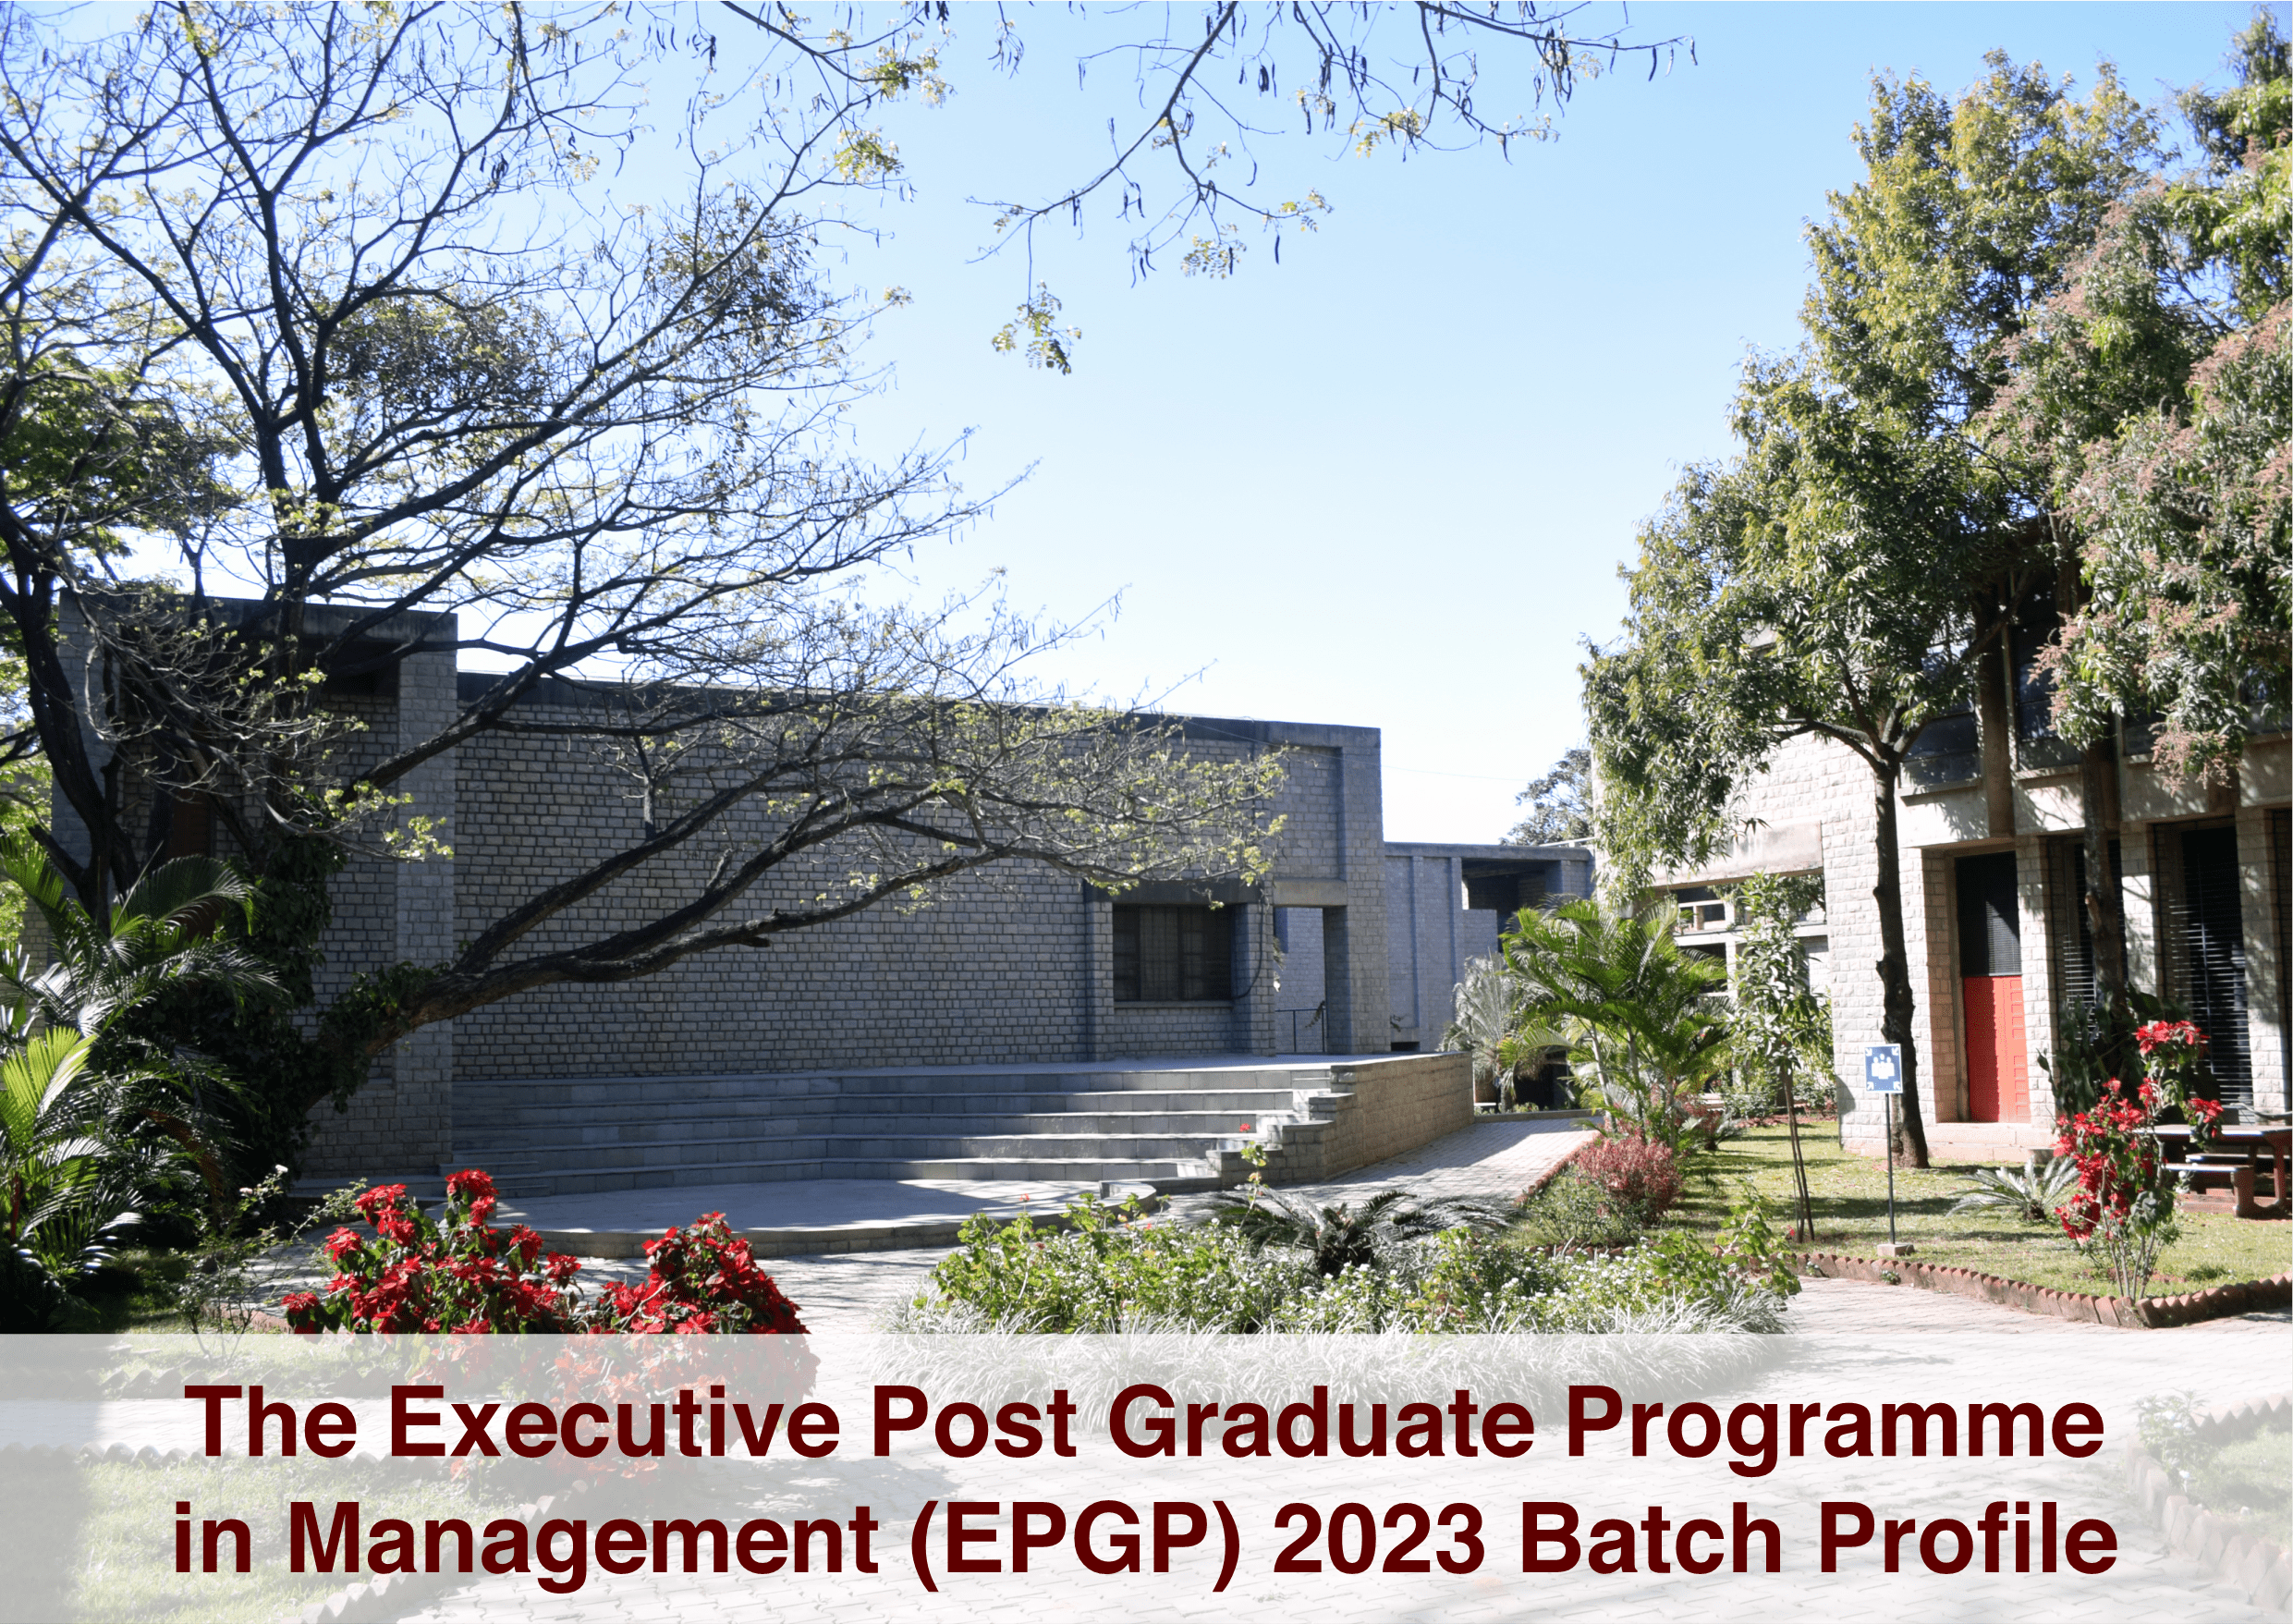 EPGP 2023 Batch Profile